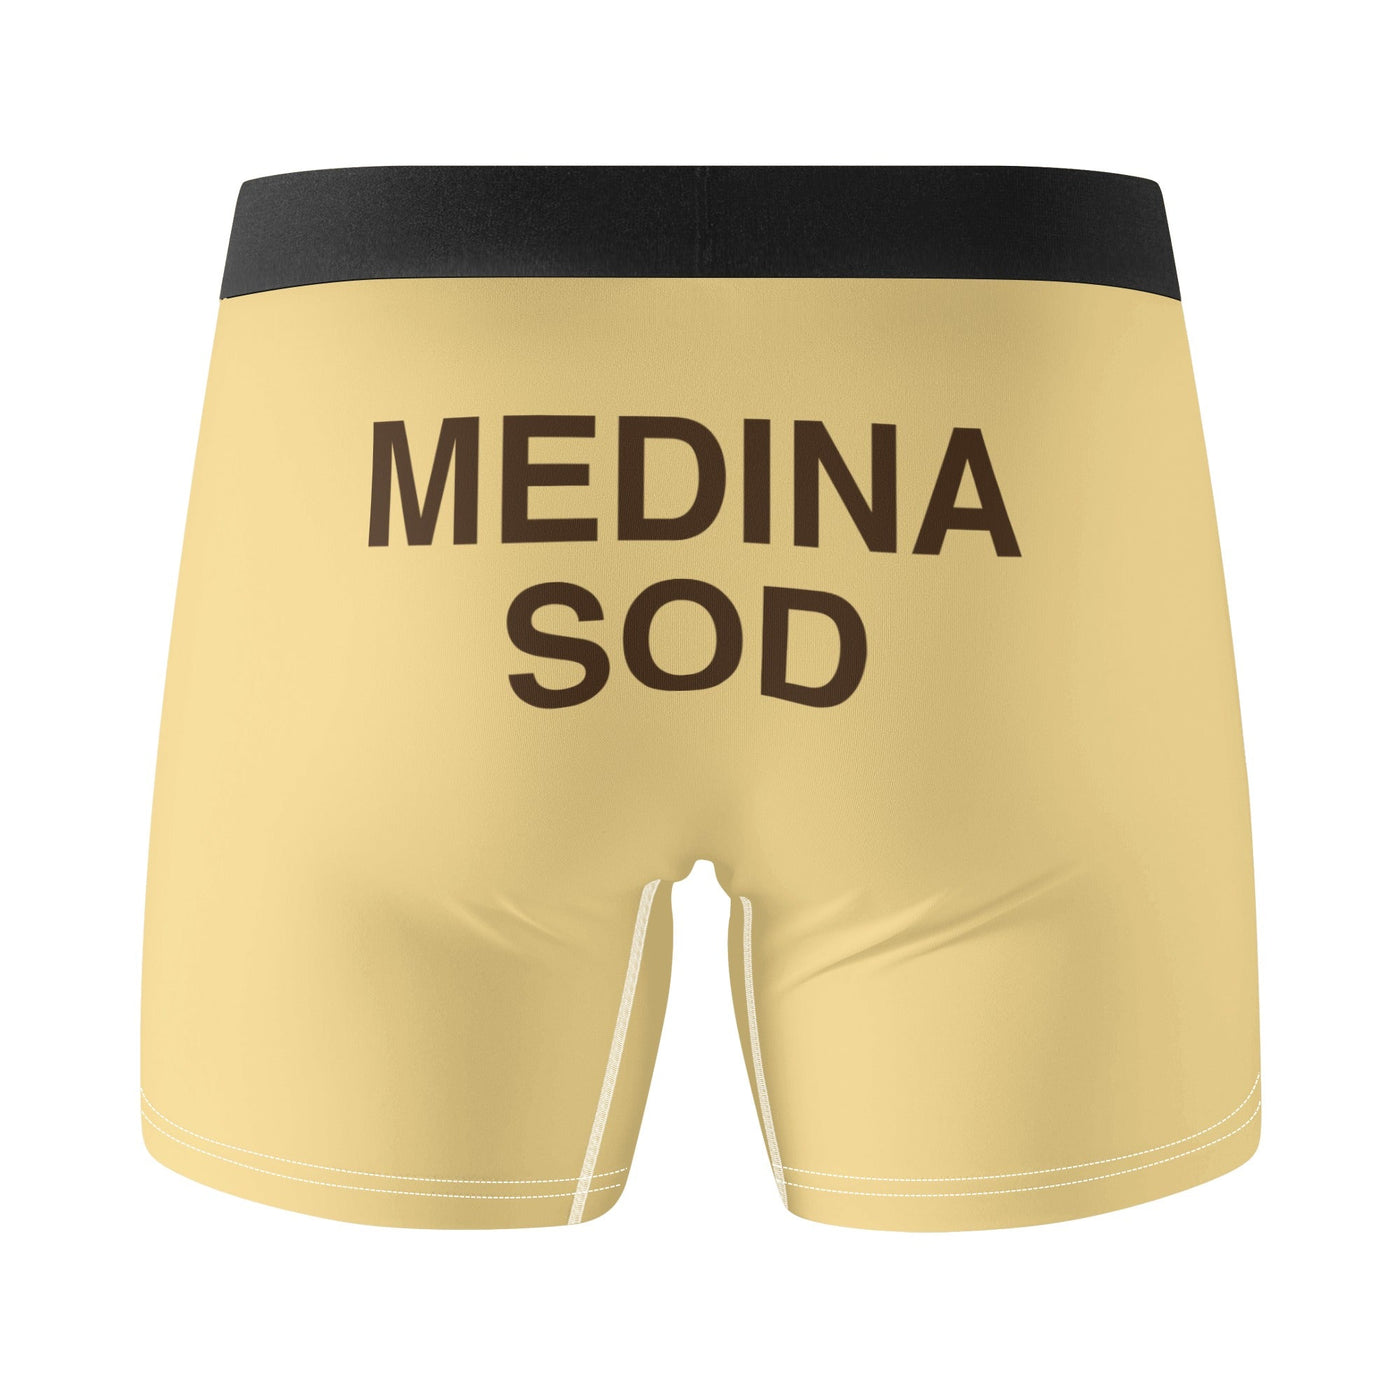 The Dude's Bowling Boxer Trunks - MEDINA SOD | Lebowski Men's Trunks Underwear